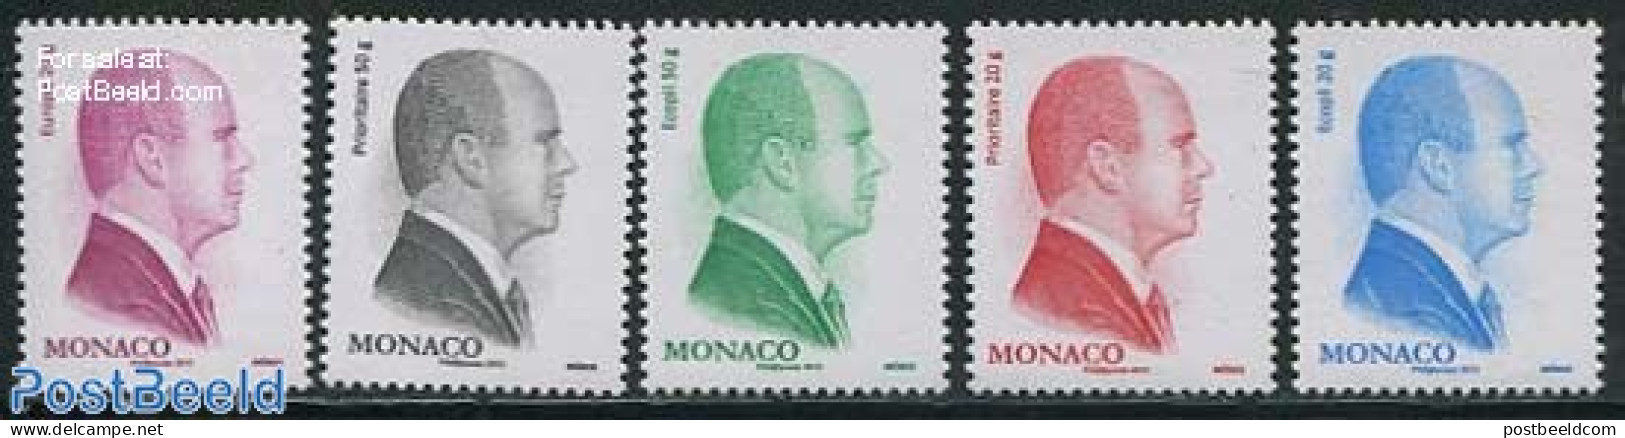 Monaco 2012 Definitives, Albert II 5v, Mint NH - Ongebruikt